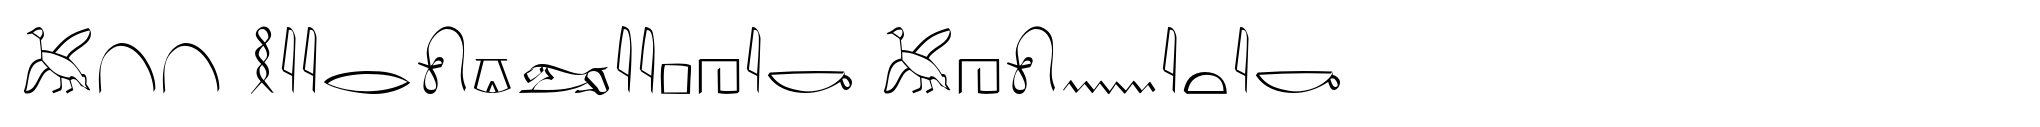 P22 Hieroglyphic Phonetic image